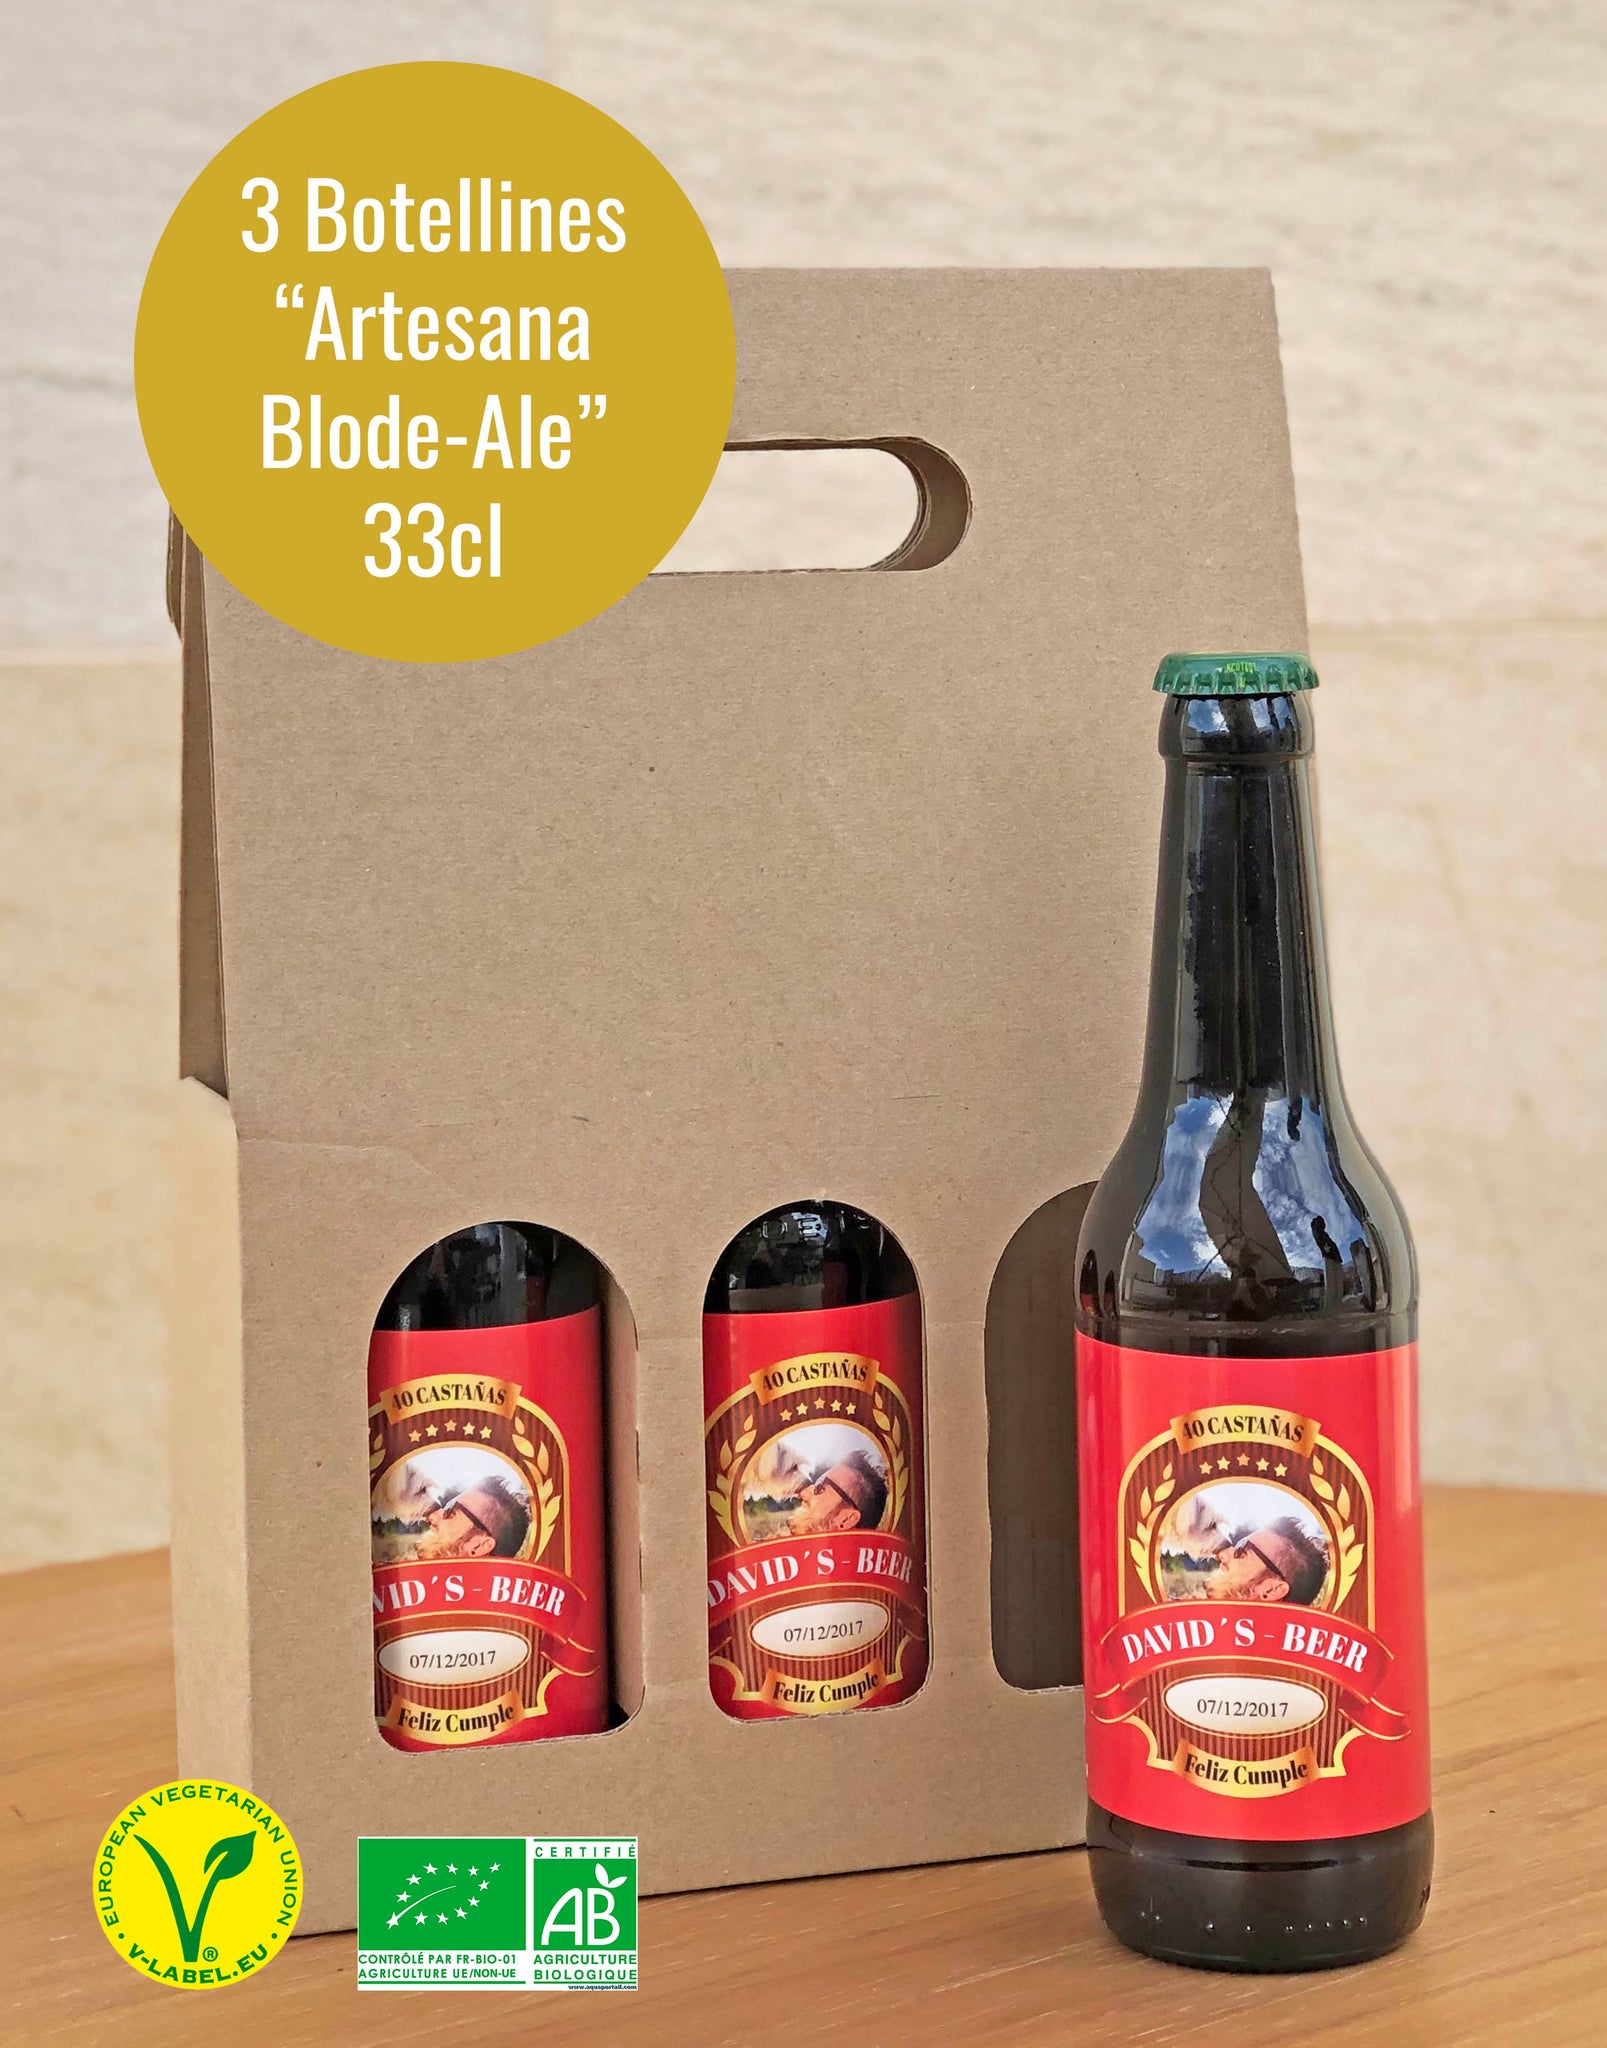 Etiquetas- para Cervezas personalizadas -Pegatinas para cervezas - Estrella  Galicia Envíos - 24 Horas